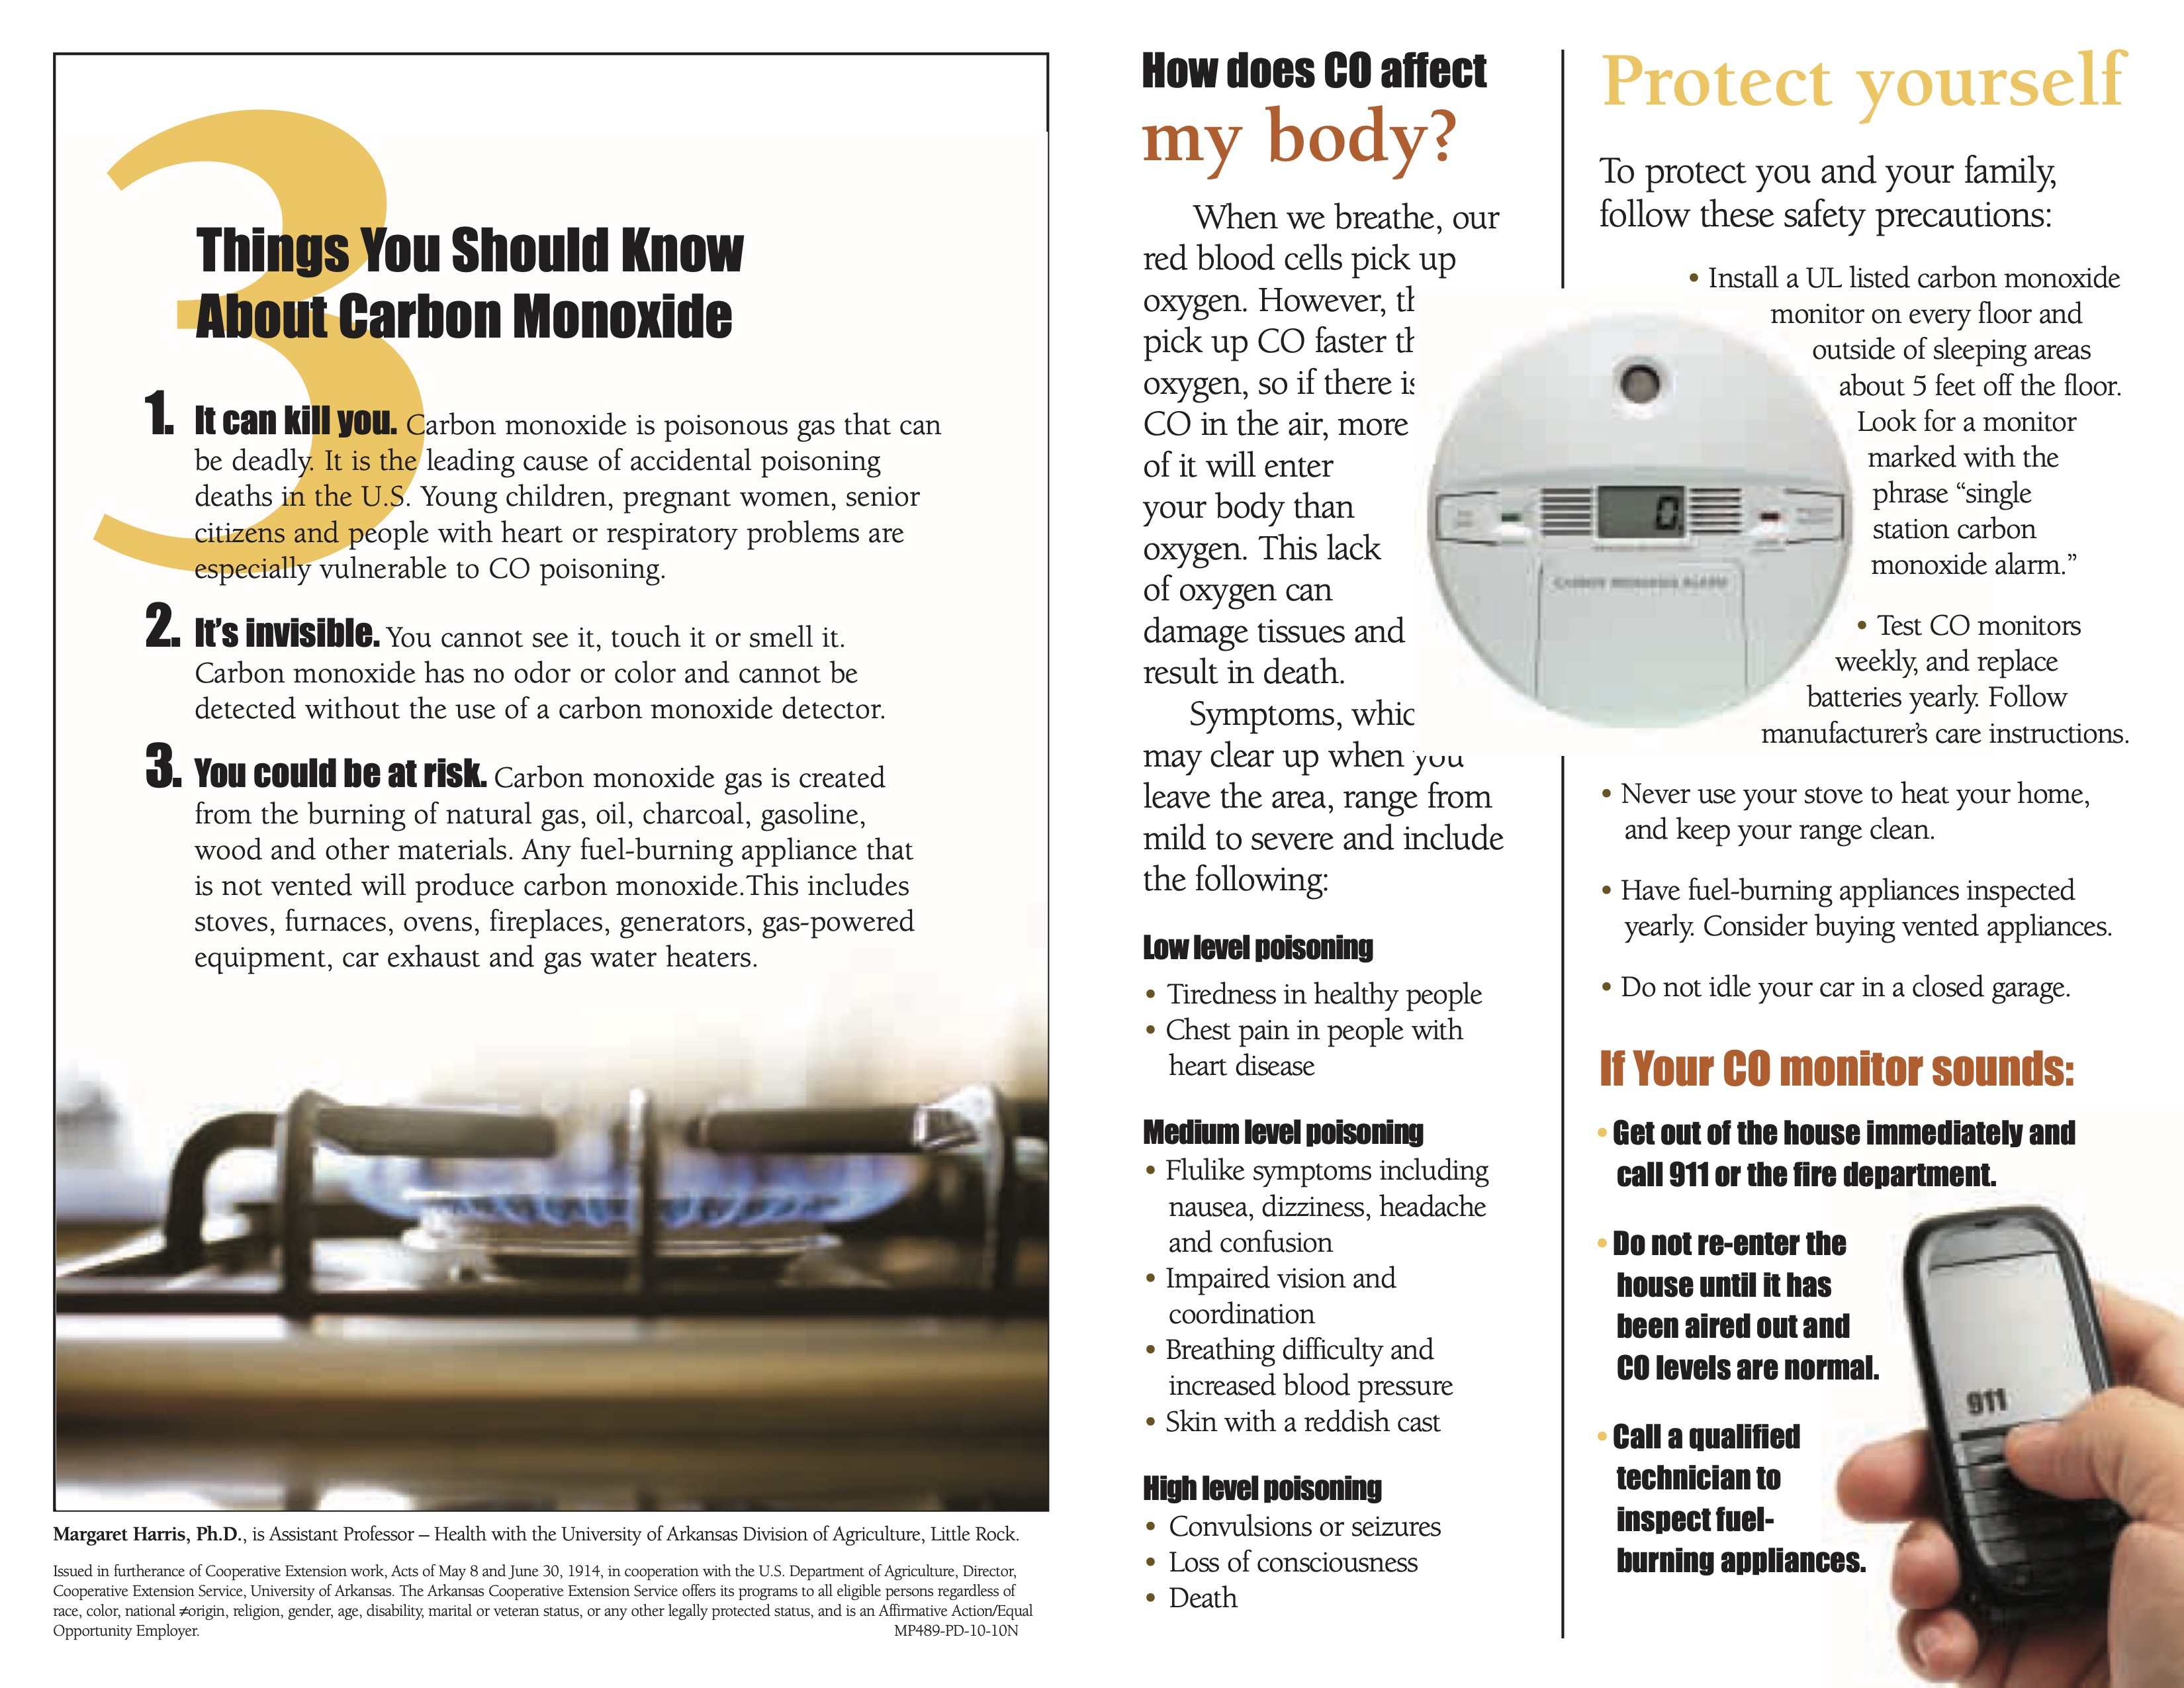 Carbon monoxide poisoning warning signs